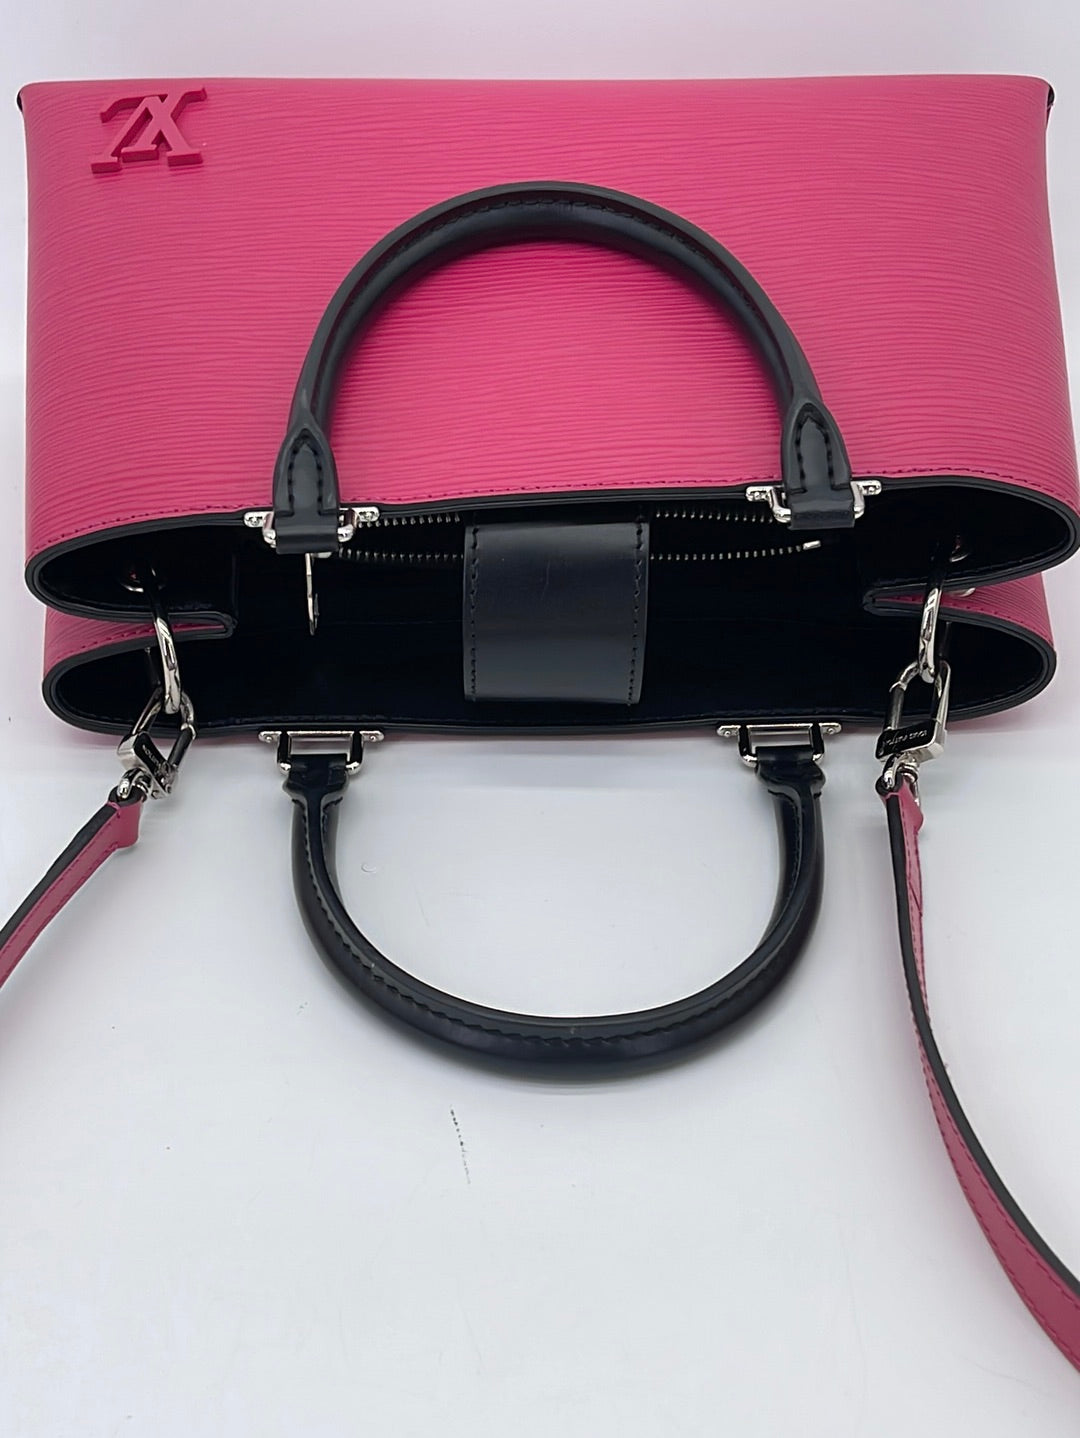 Preloved Louis Vuitton Pink Epi Kleber PM Tote Bag FL1138 072423